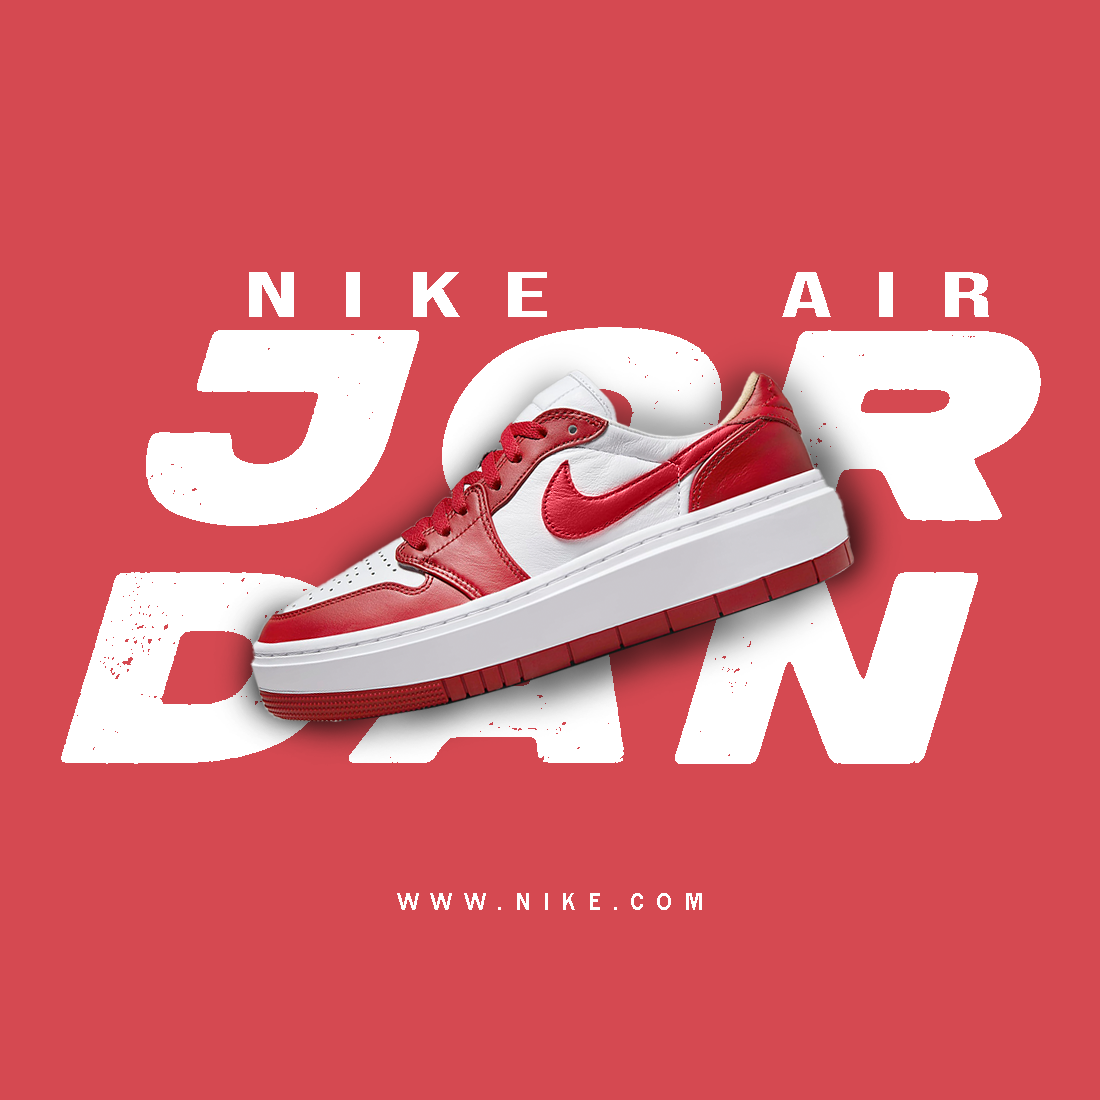 Air Jordan 1 Elevate Low Shoes Poster cover image.